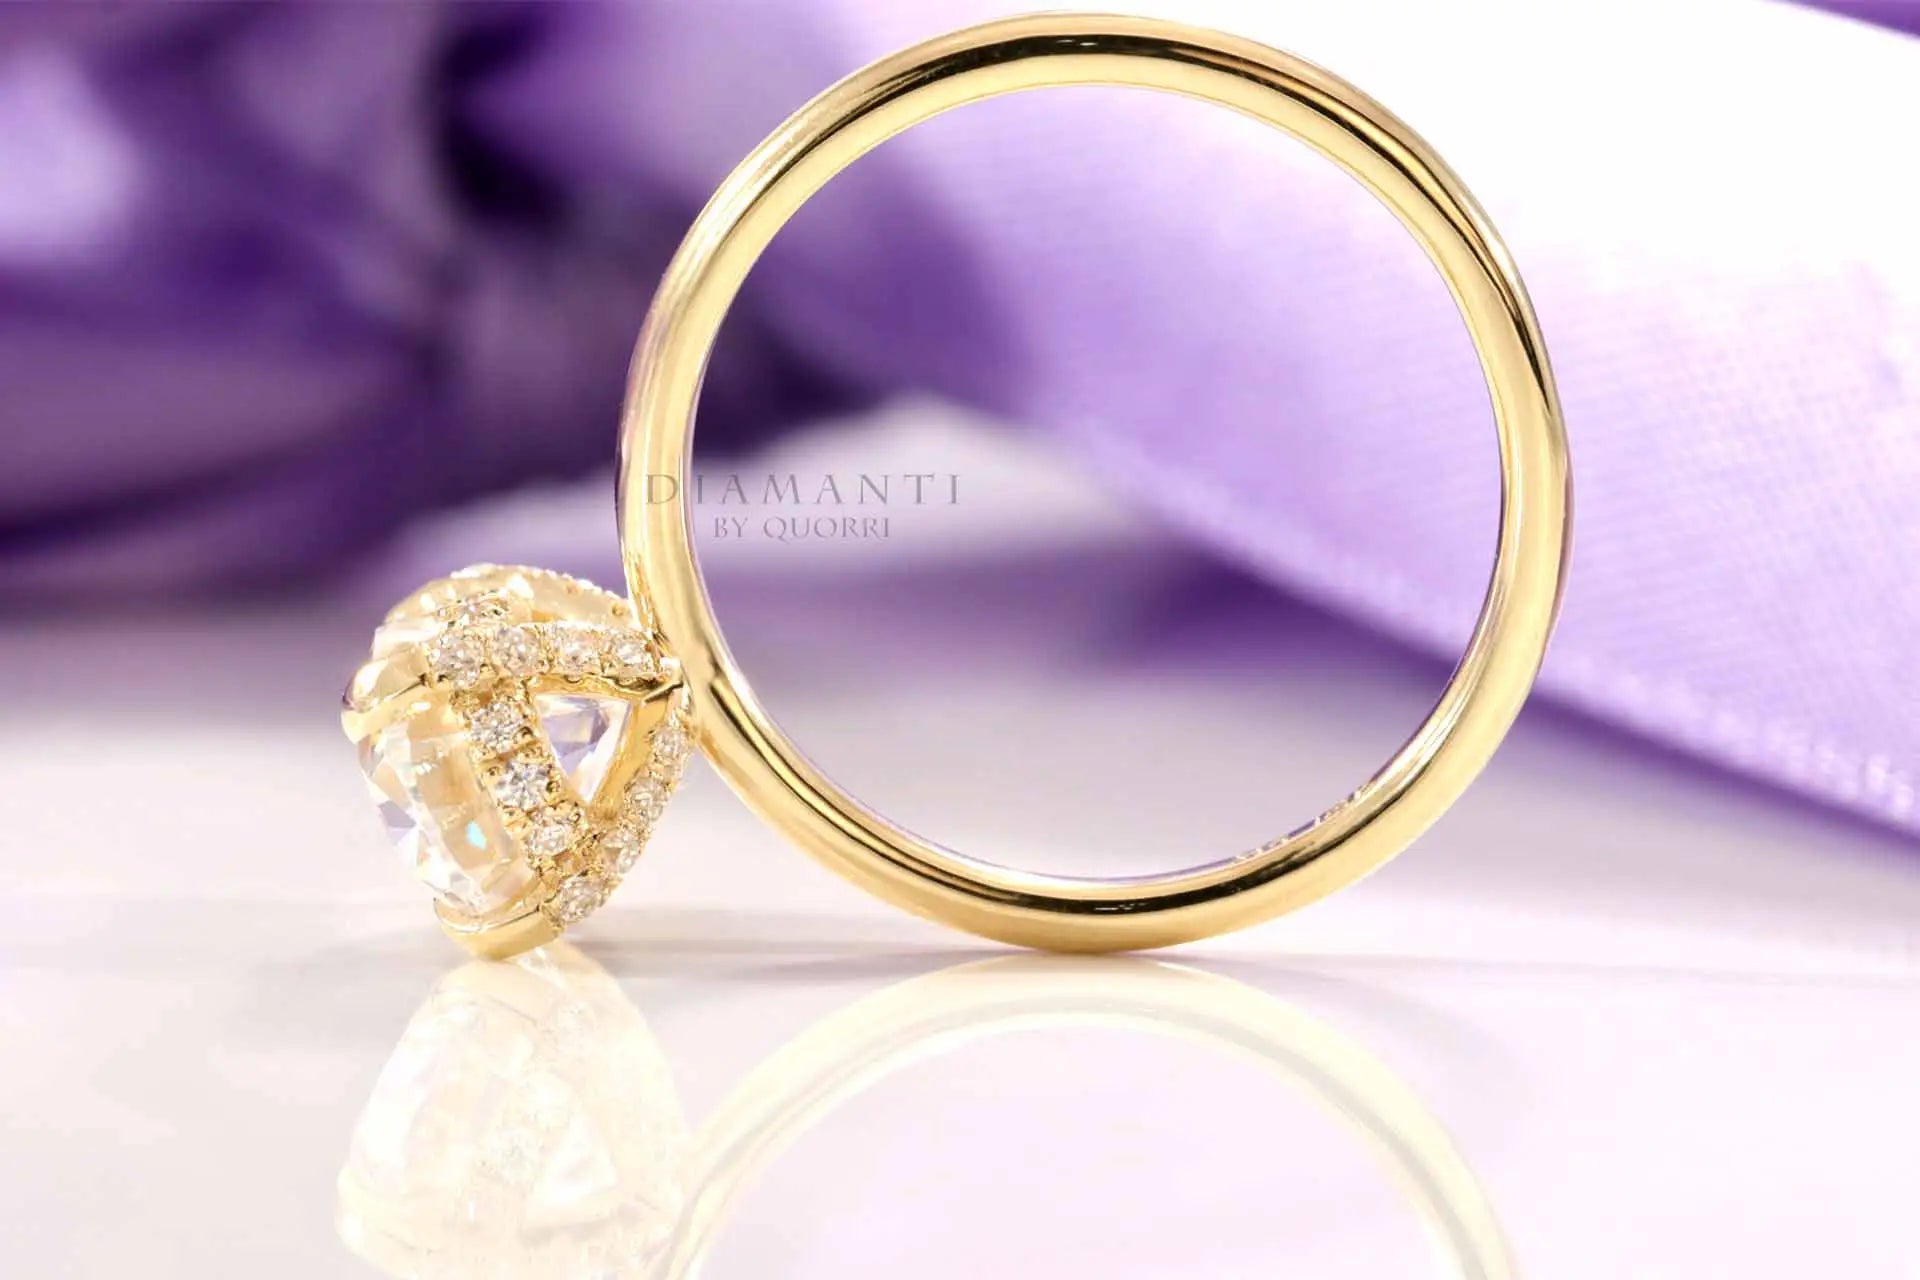 under-halo claw prong 18k yellow gold 3 carat oval lab growm diamond engagement ring Quorri